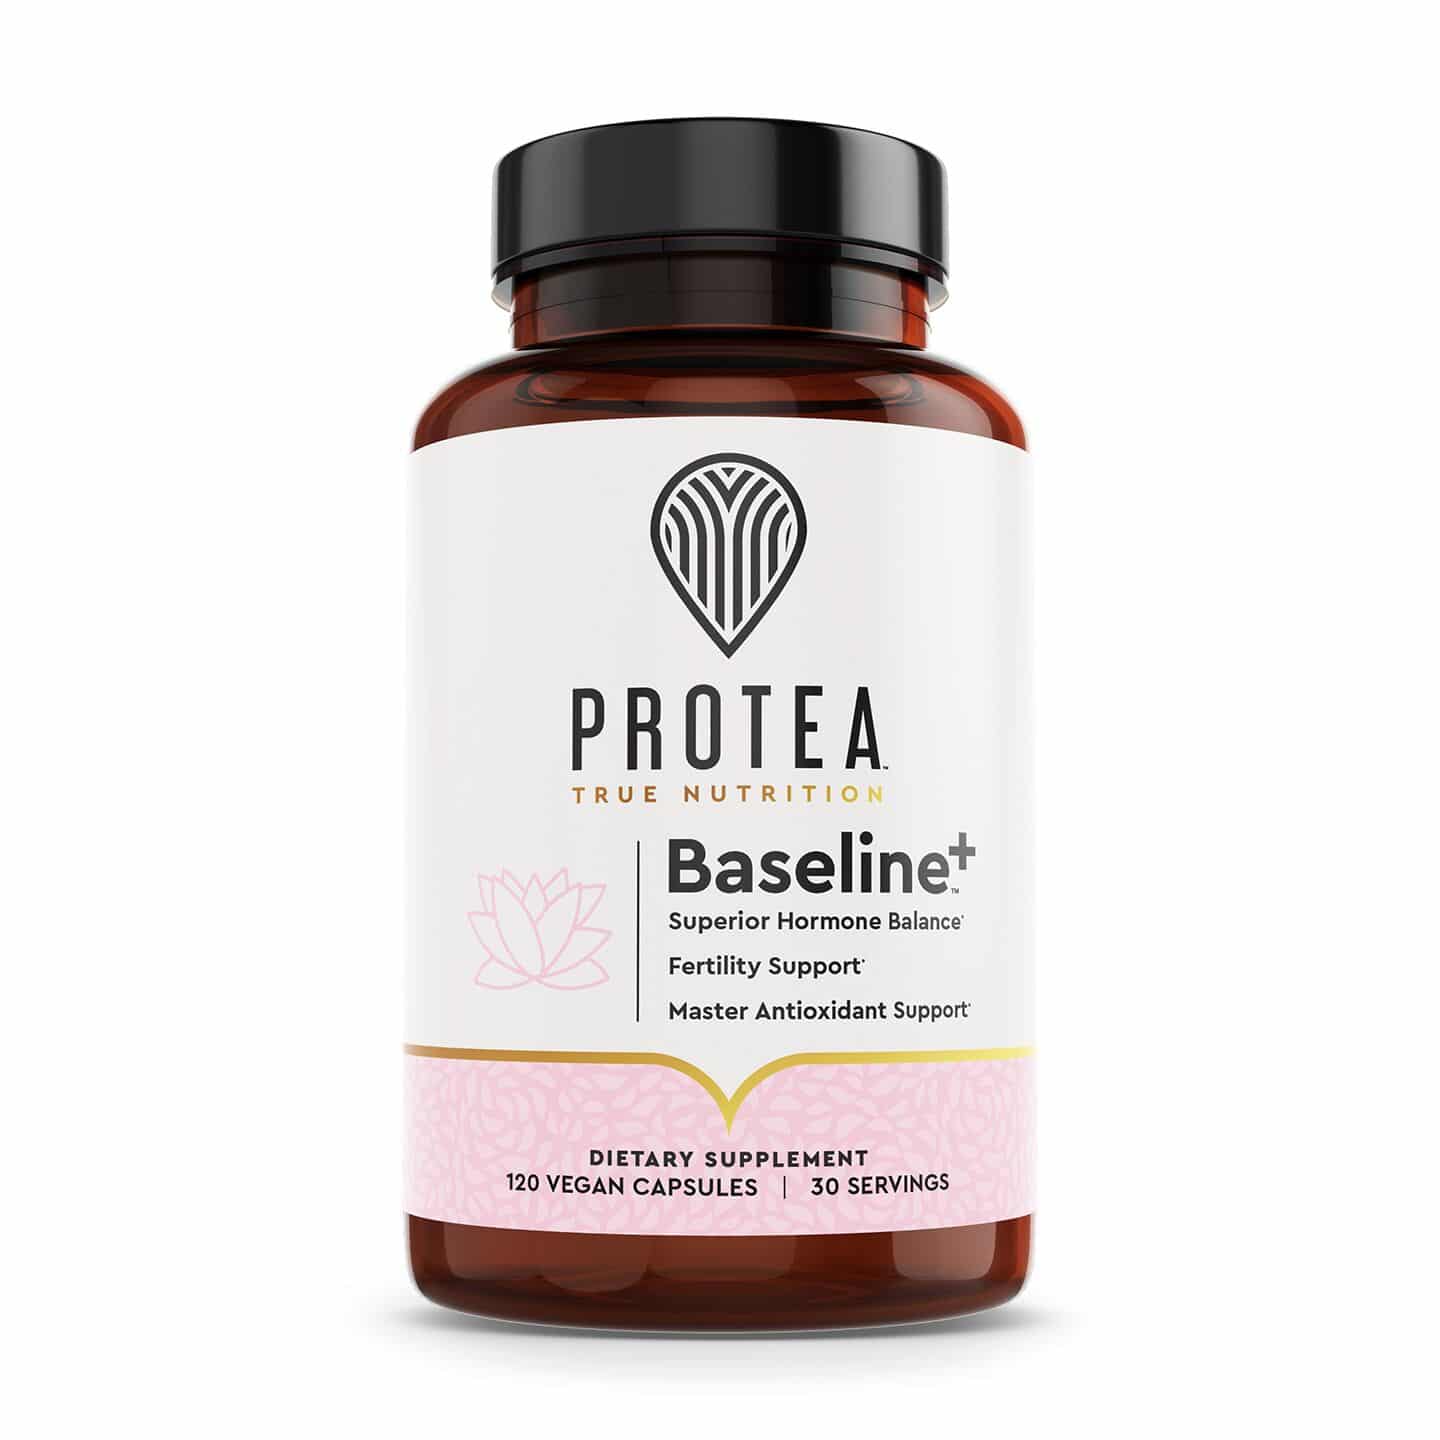 Protea Nutrition - Baseline+